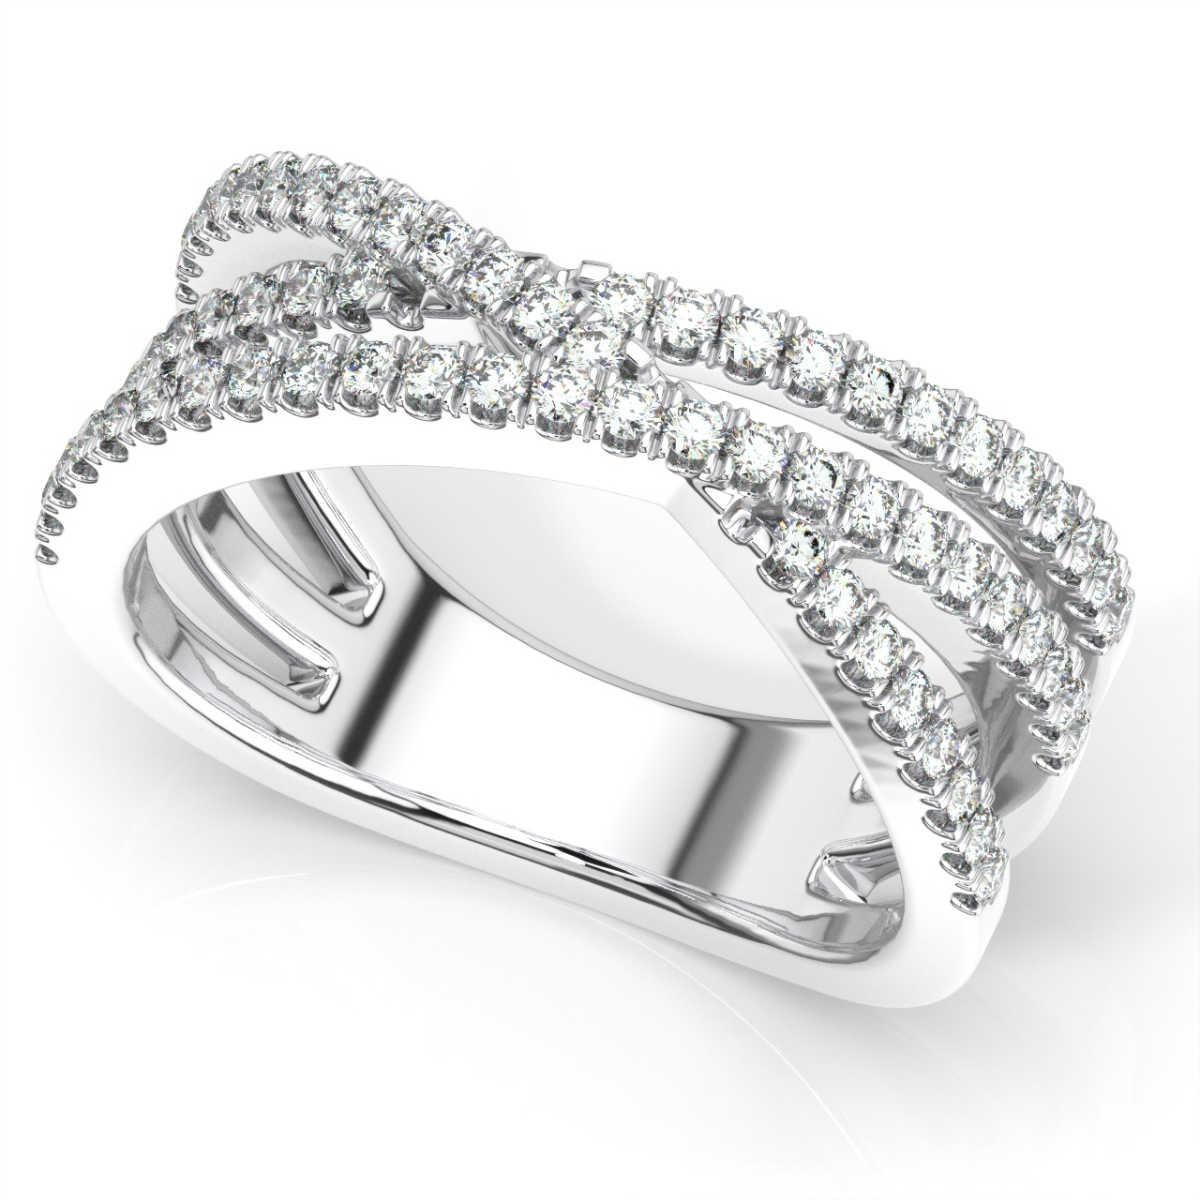 1 2 karat diamond ring